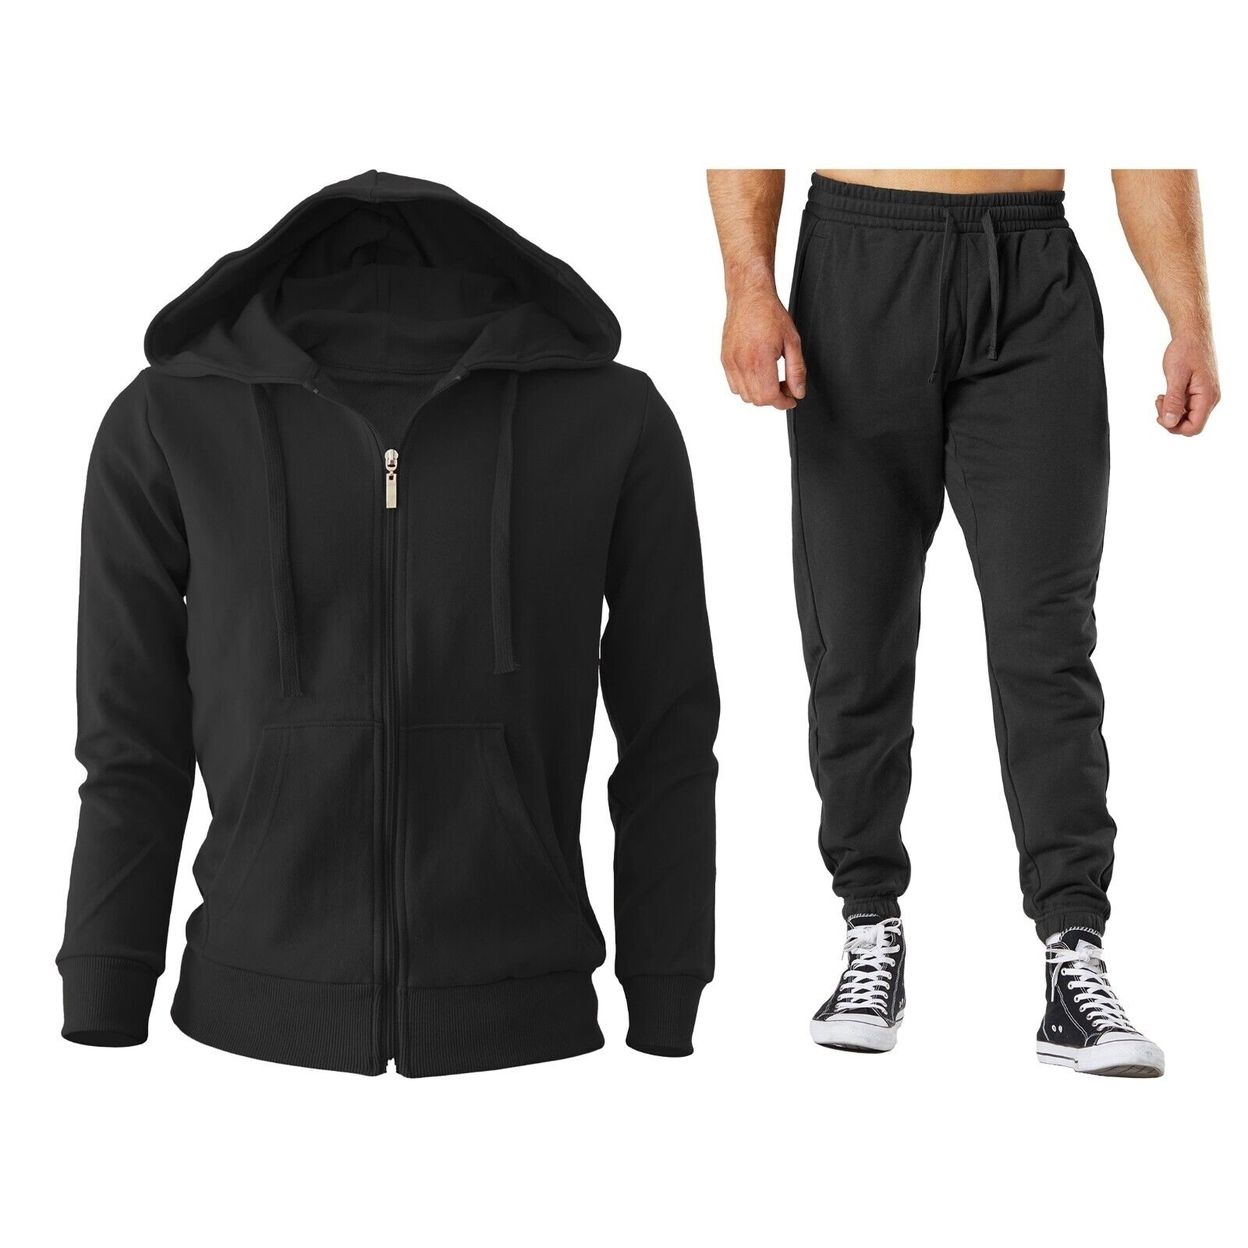 4-Piece: Men's Winter Warm Cozy Athletic Multi-Pockets BIG & TALL Sweatsuit Set - Black, X-large